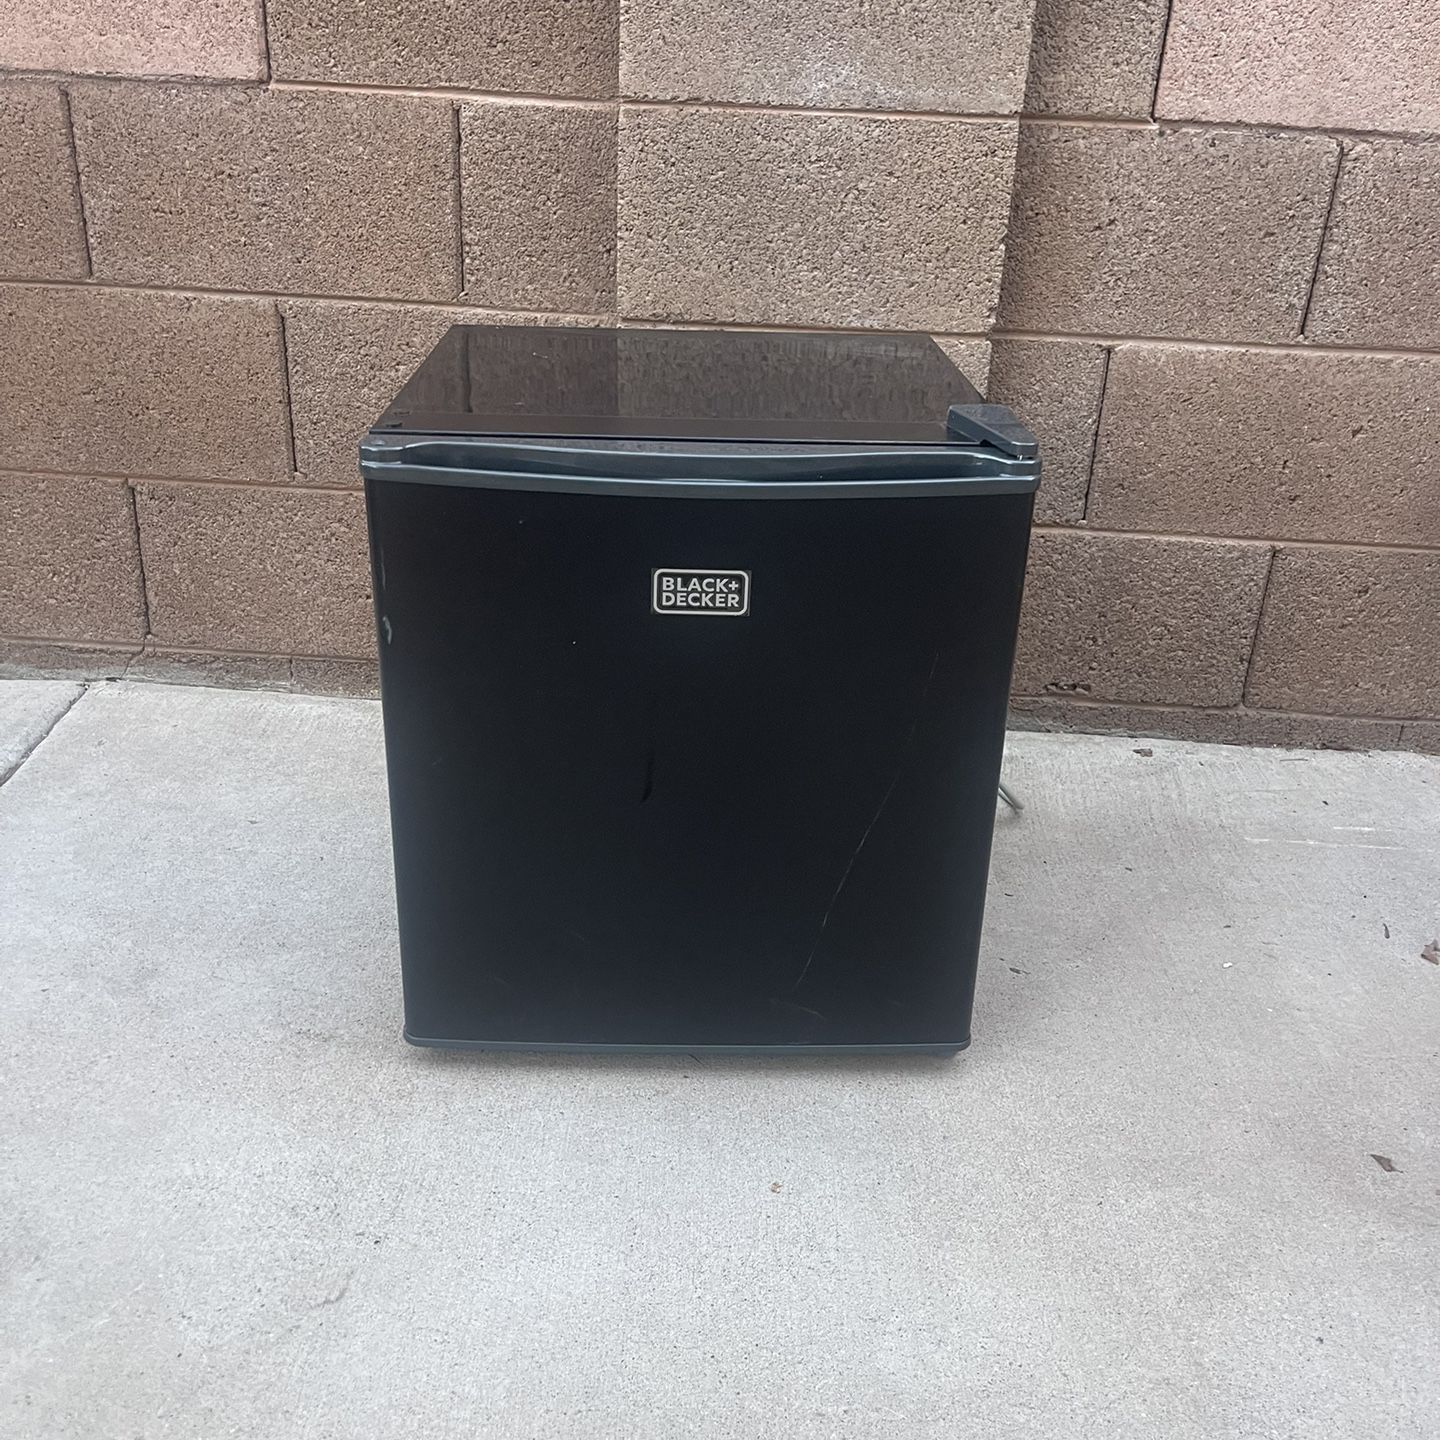 Mini Fridge Black and Decker for Sale in Glendale, AZ - OfferUp